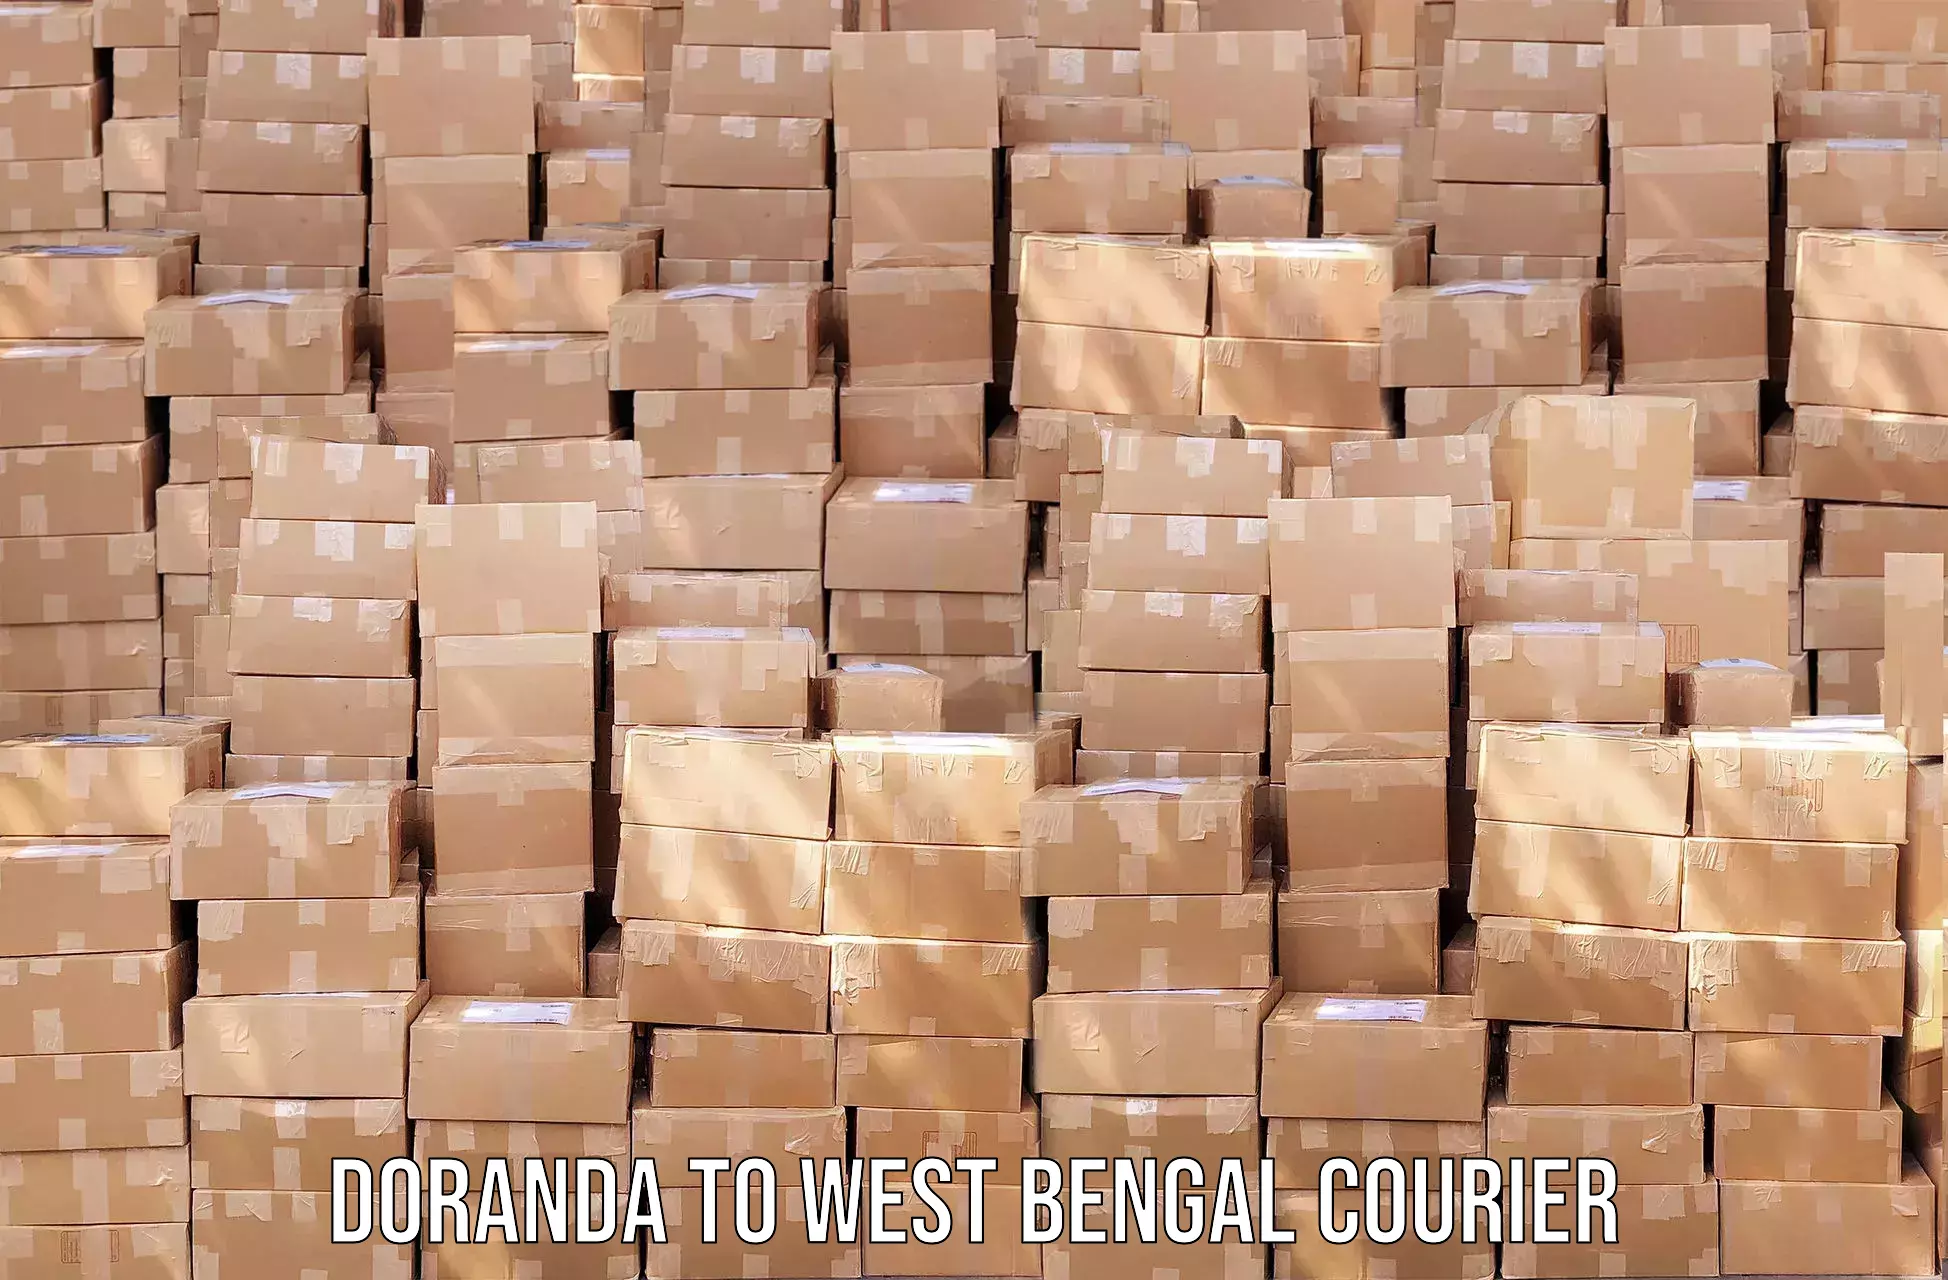 Efficient order fulfillment Doranda to West Bengal